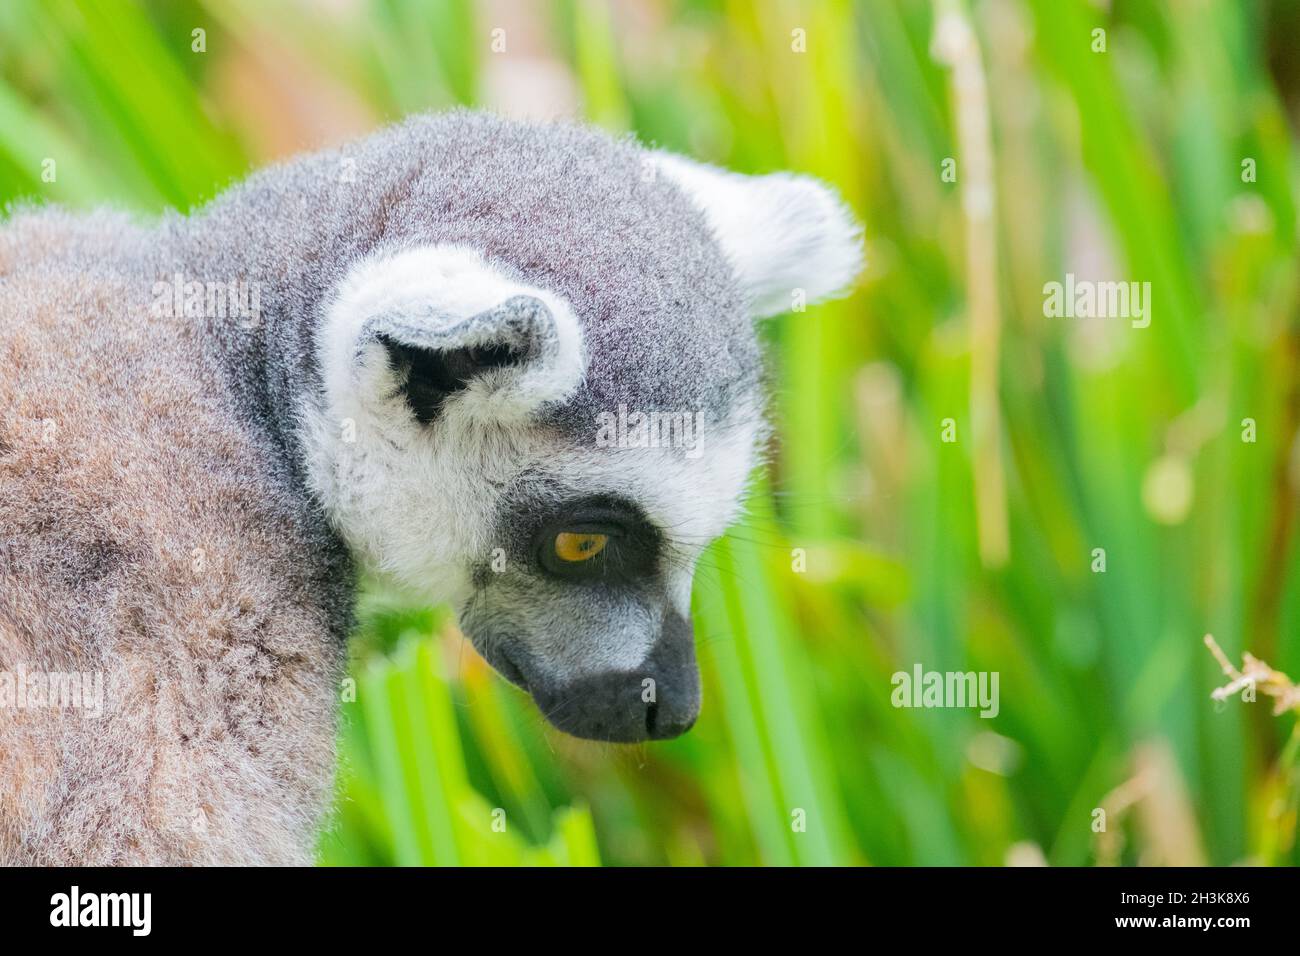 Ringtailed lemur climbing a tree Stock Photo